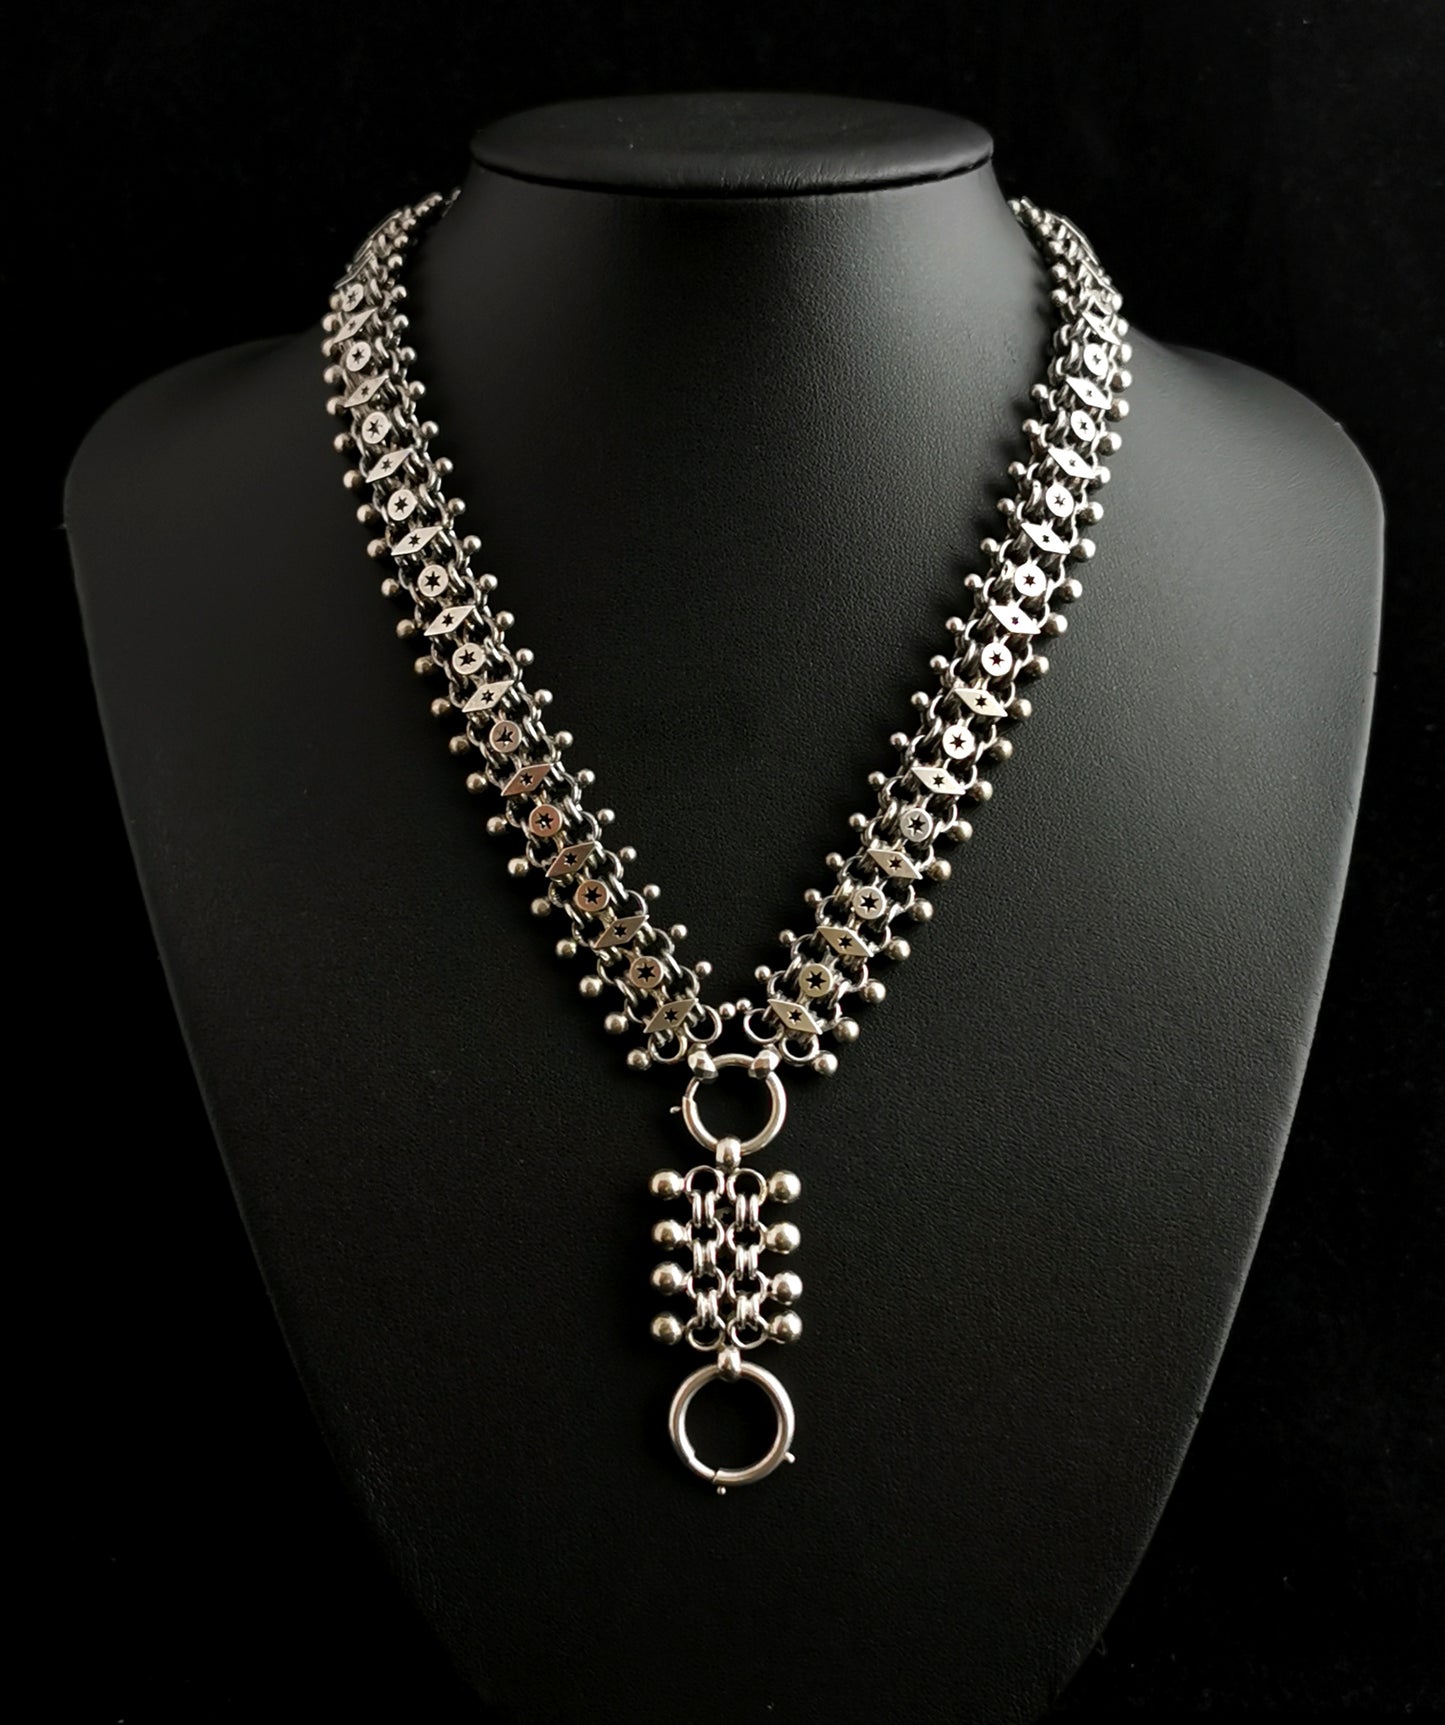 Antique Victorian silver book chain necklace Aesthetic era